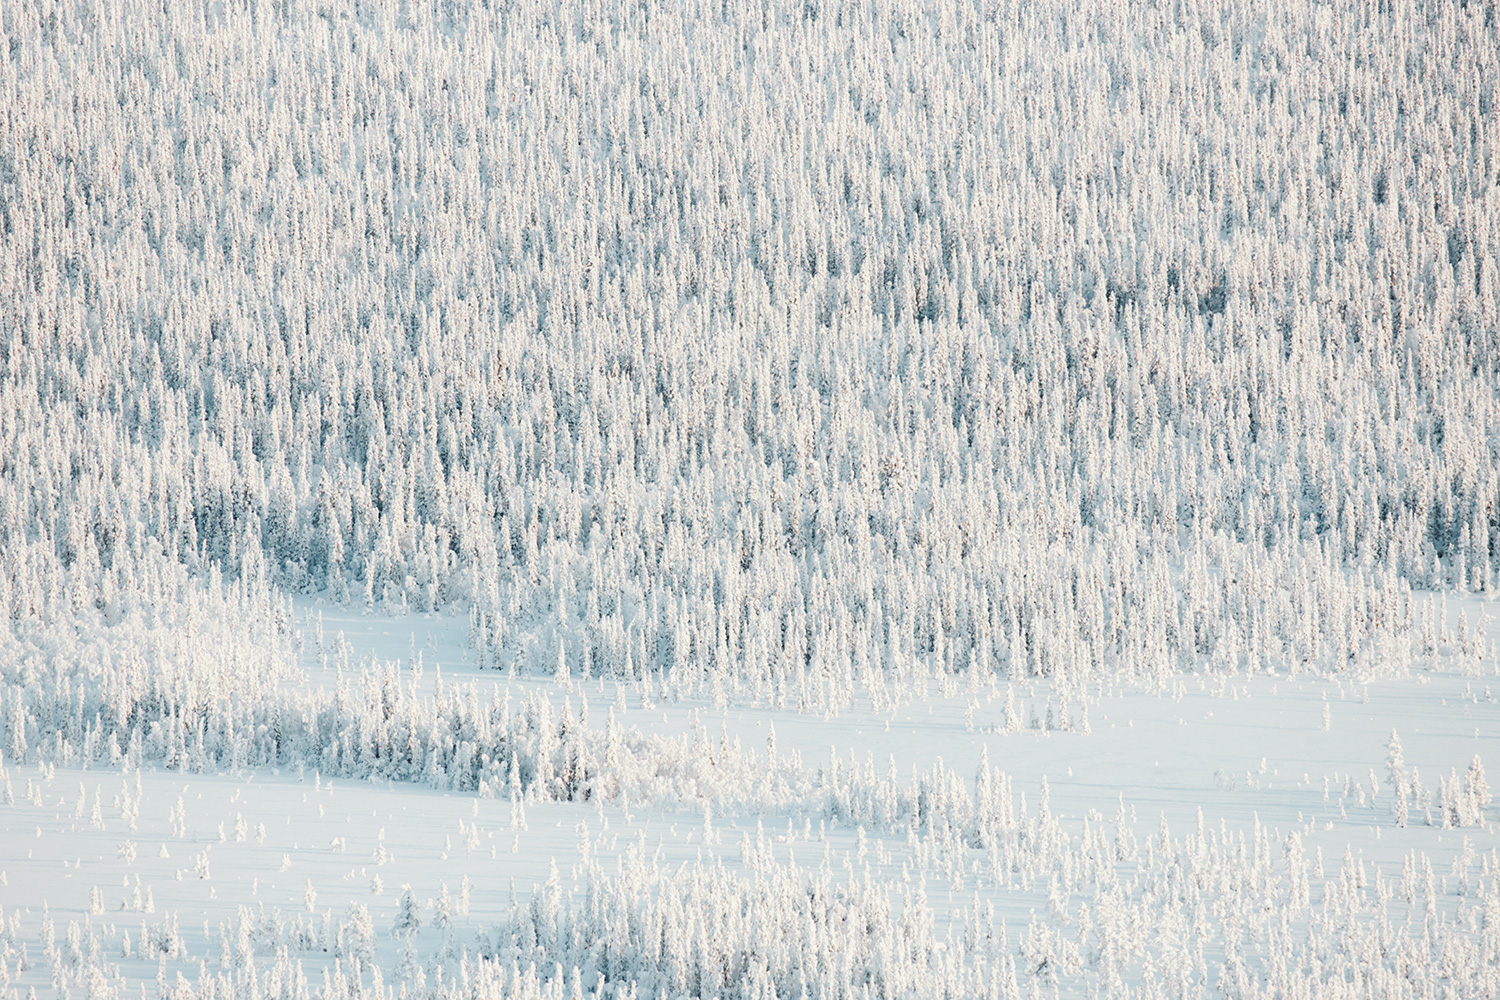 Raphaelle Monvoisin iceland lapland ashen landscape winter wildscape white grey snow photography